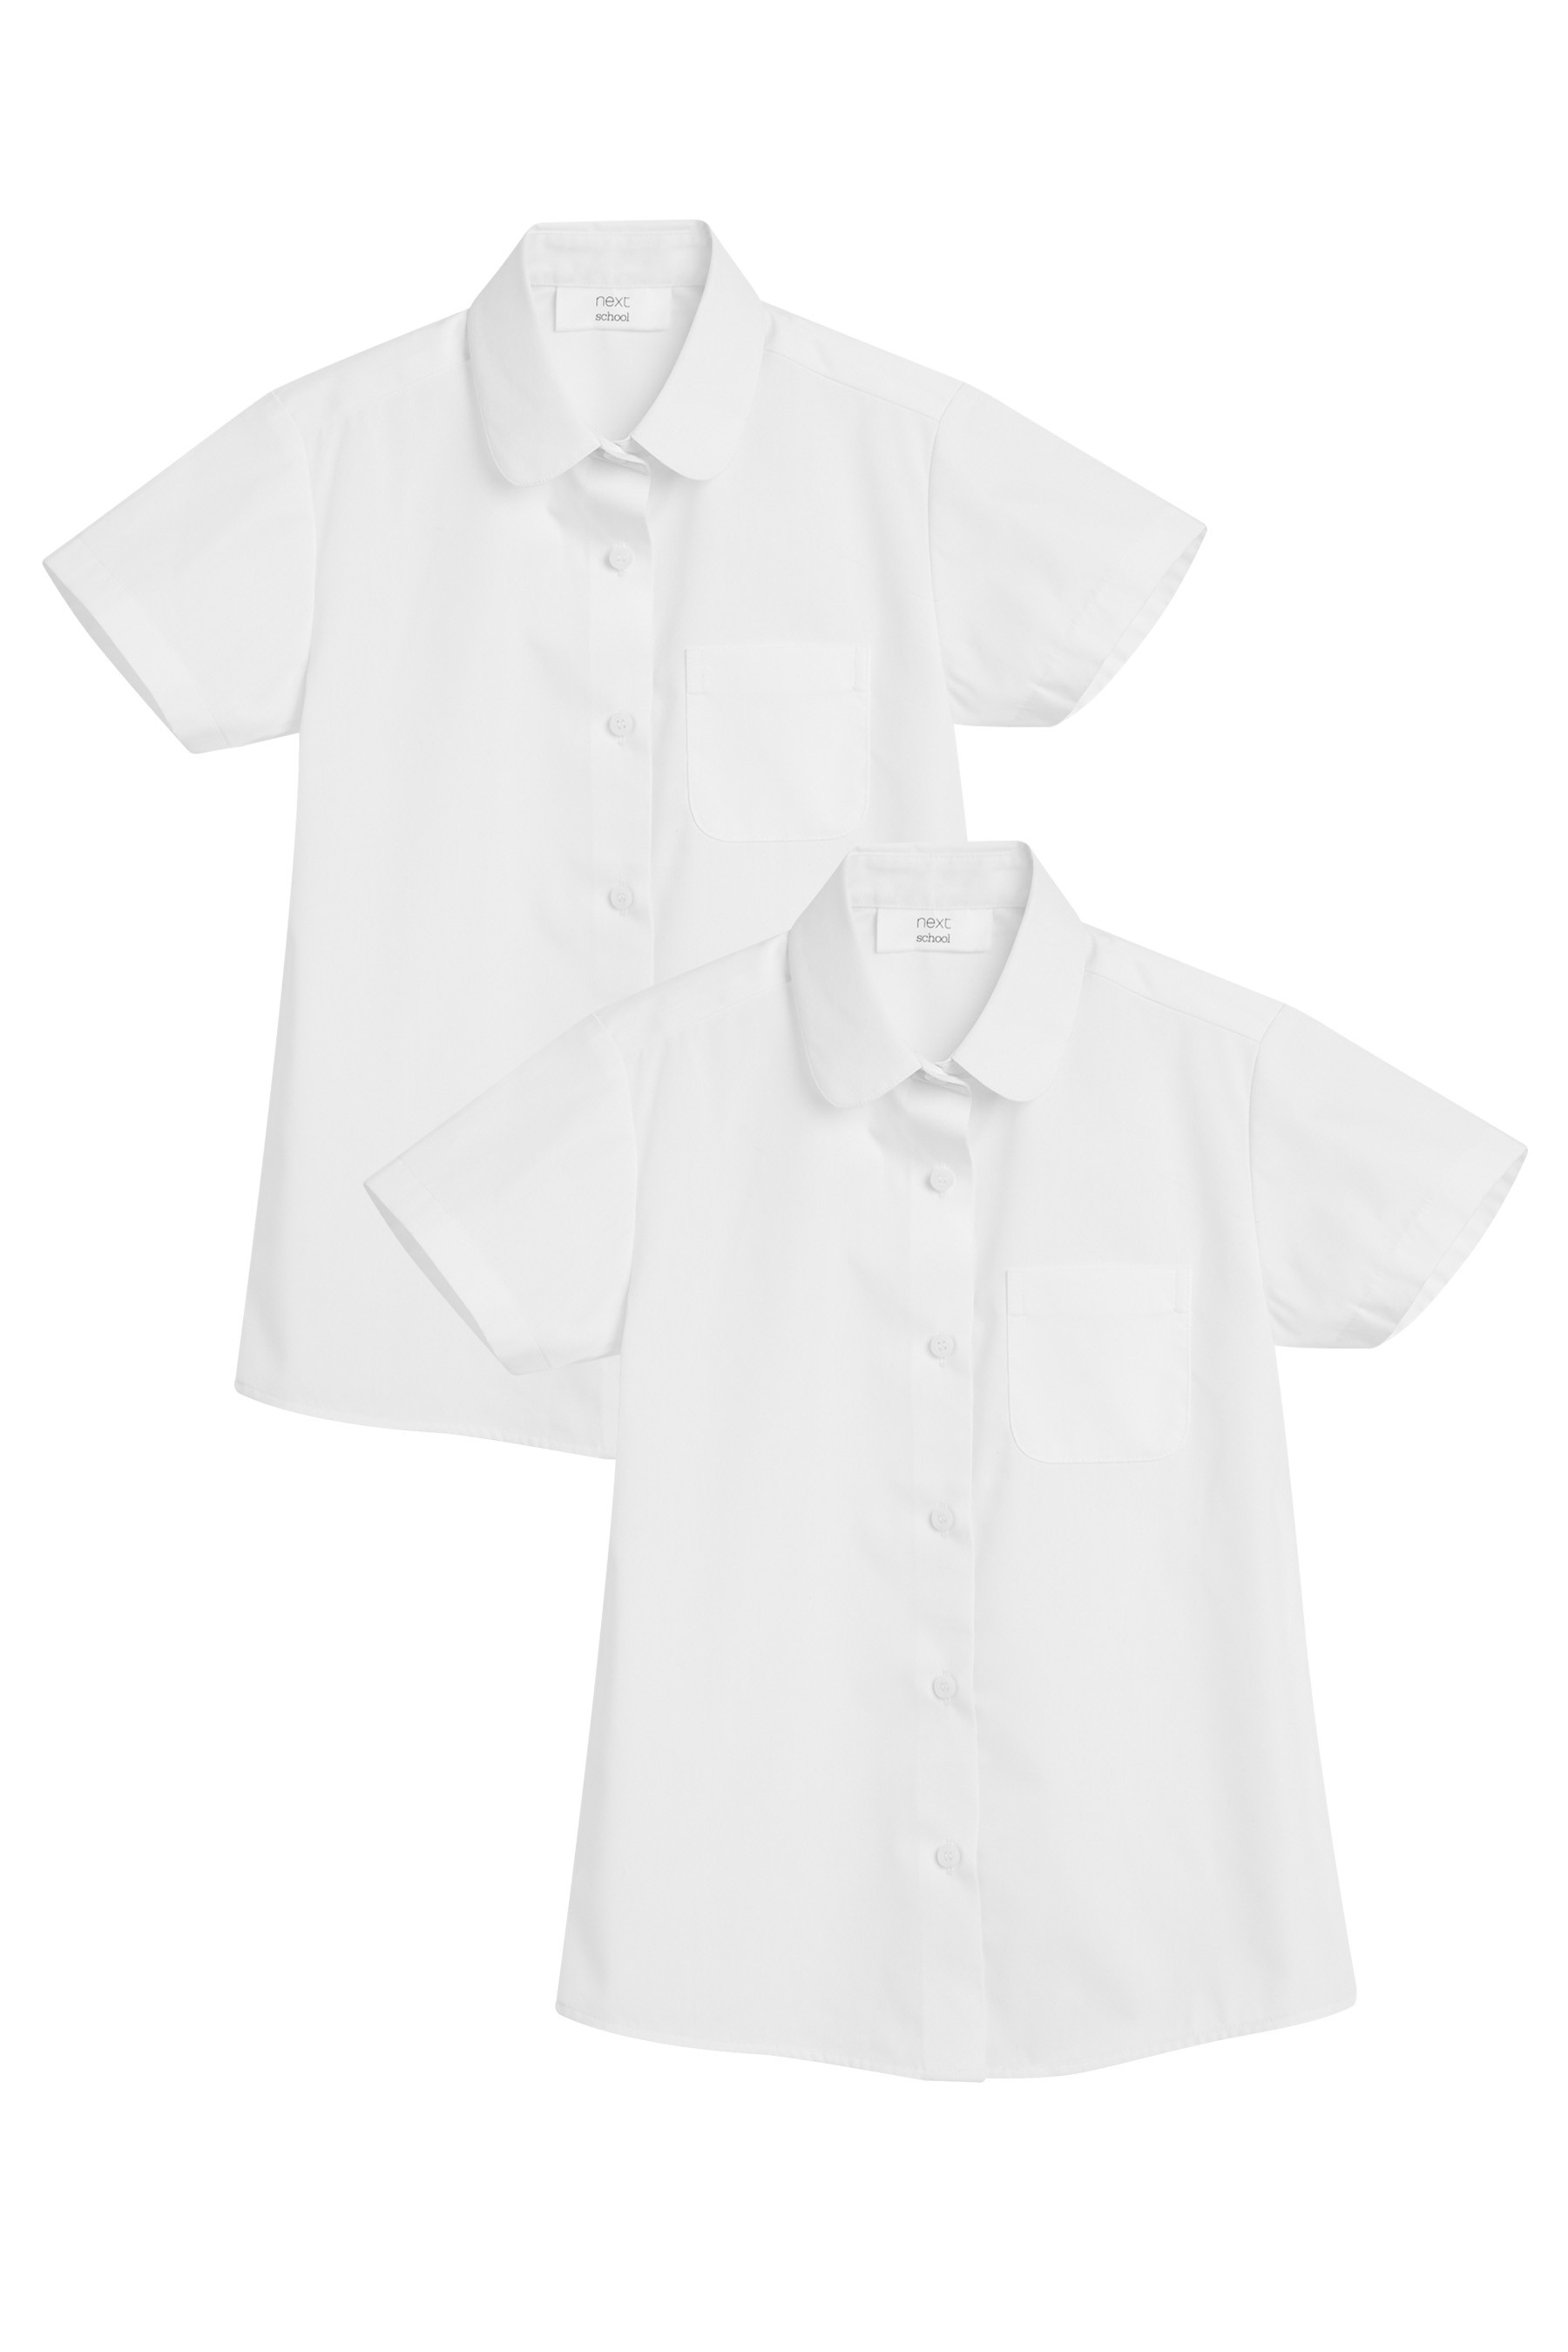 2 Pack Short Sleeve Curved Collar Shirt (3-16yrs)